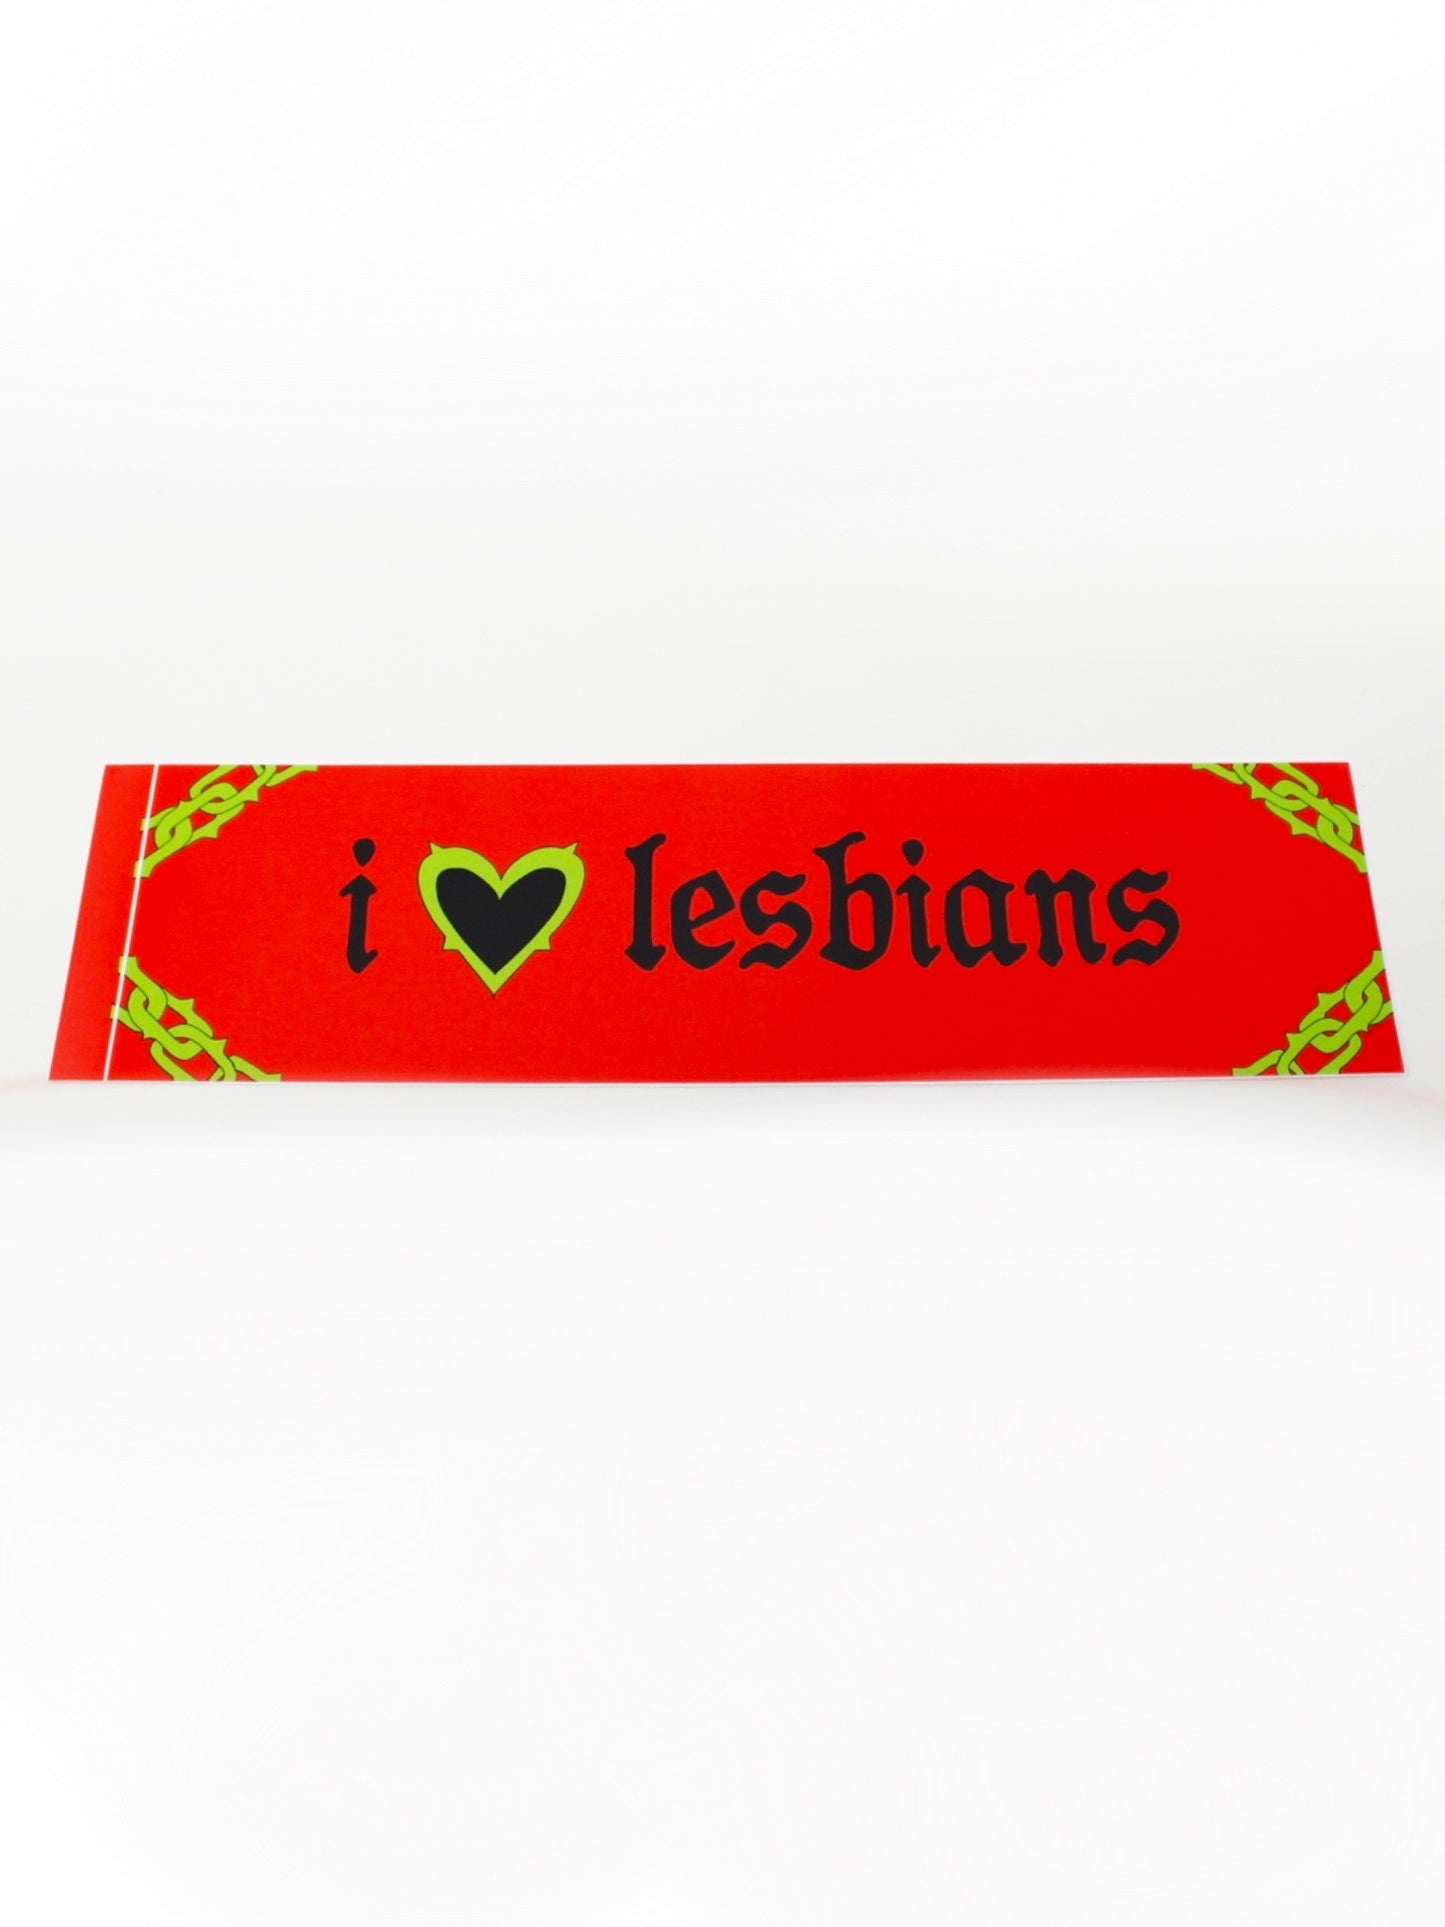 I <3 Lesbians Bumper Sticker